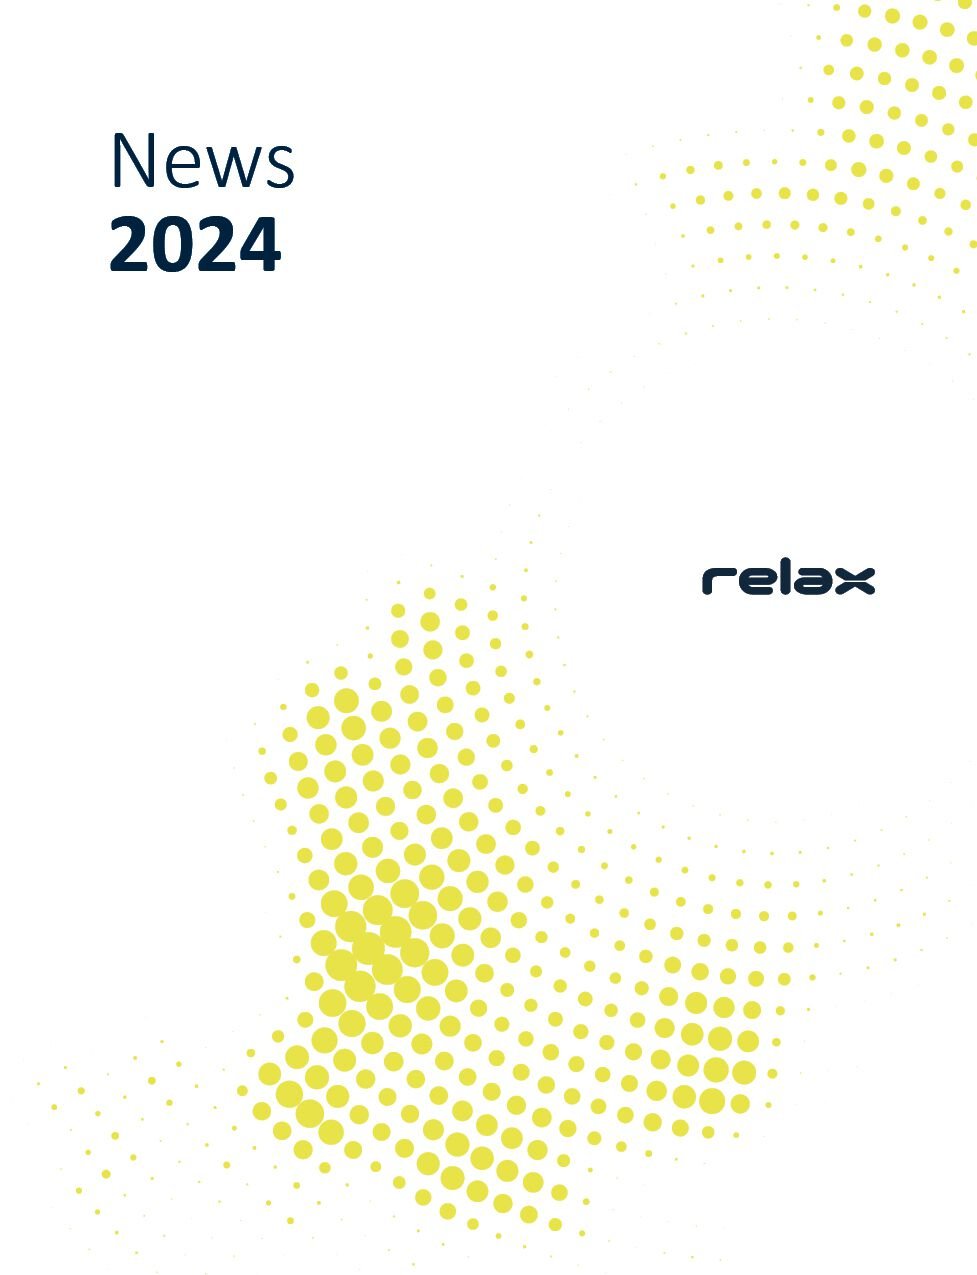 Relax - News 2024 (it, en, fr, de, ru)